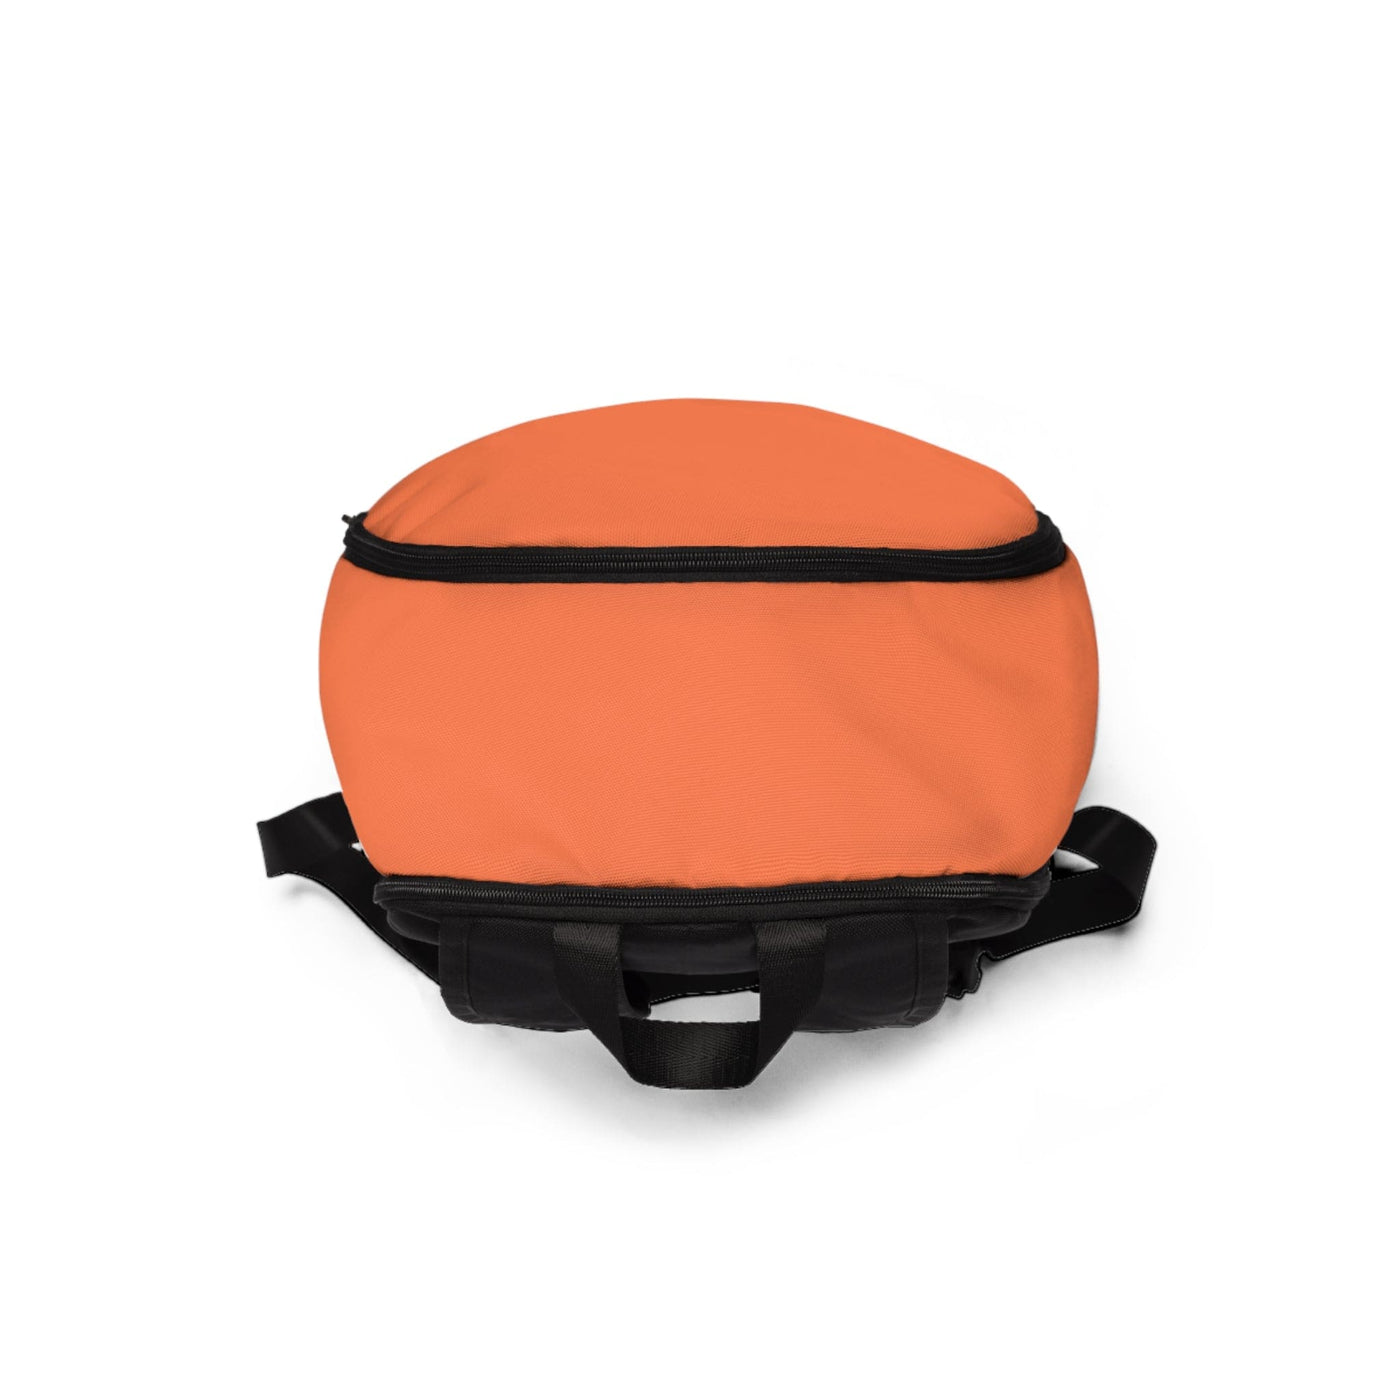 Fashion Backpack Waterproof Coral Orange Red - Bags